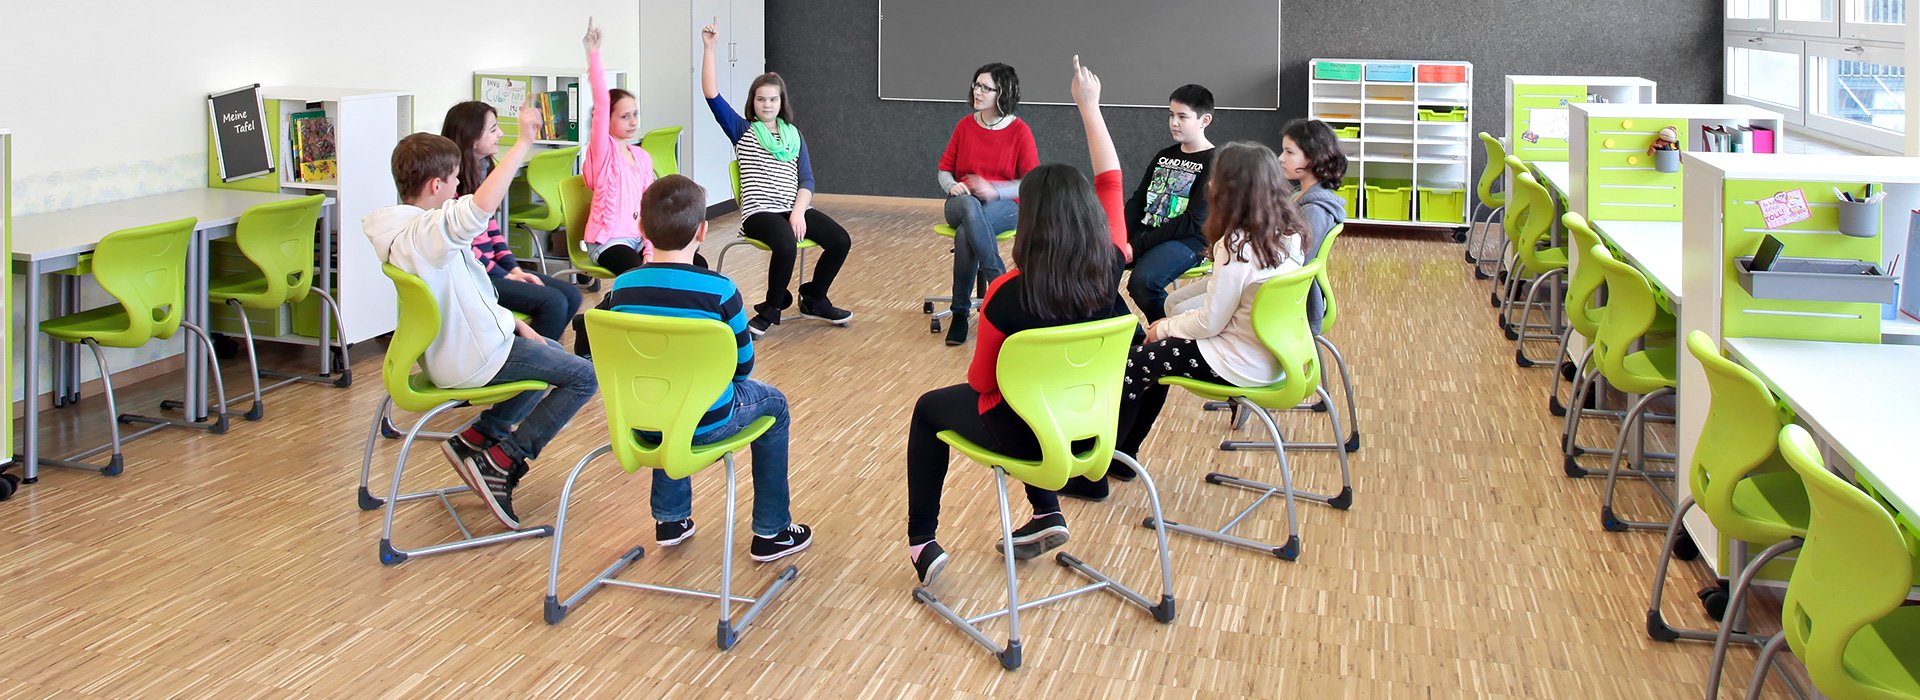 salle de classe flexible - ronde